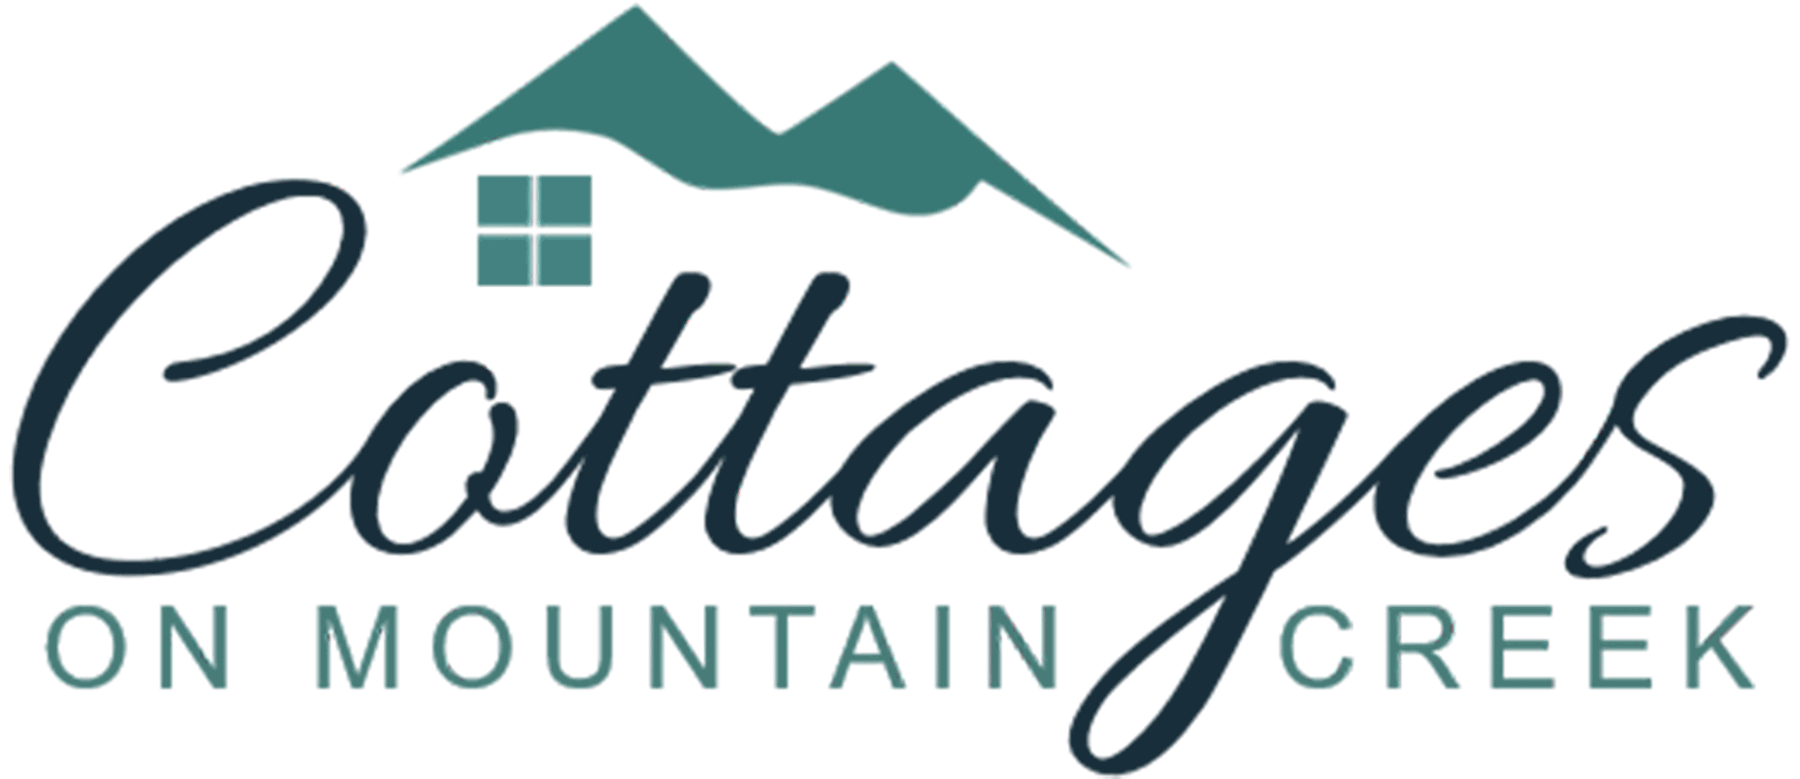 Mountain Creek Logo - cottages mountain creek logo